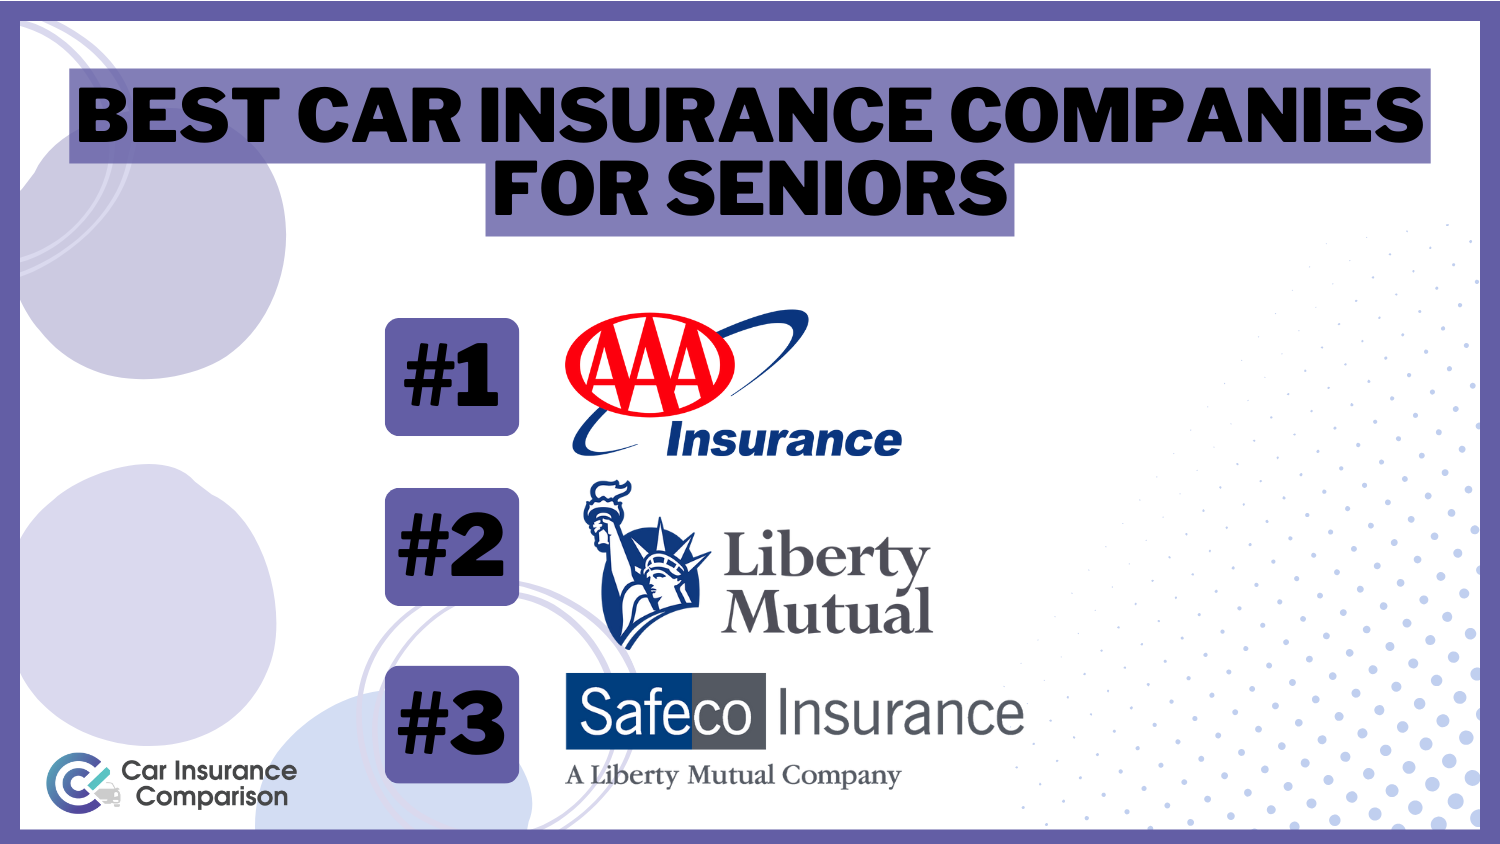 AAA, Liberty Mutual, Safeco: Best Car Insurance Companies for Seniors